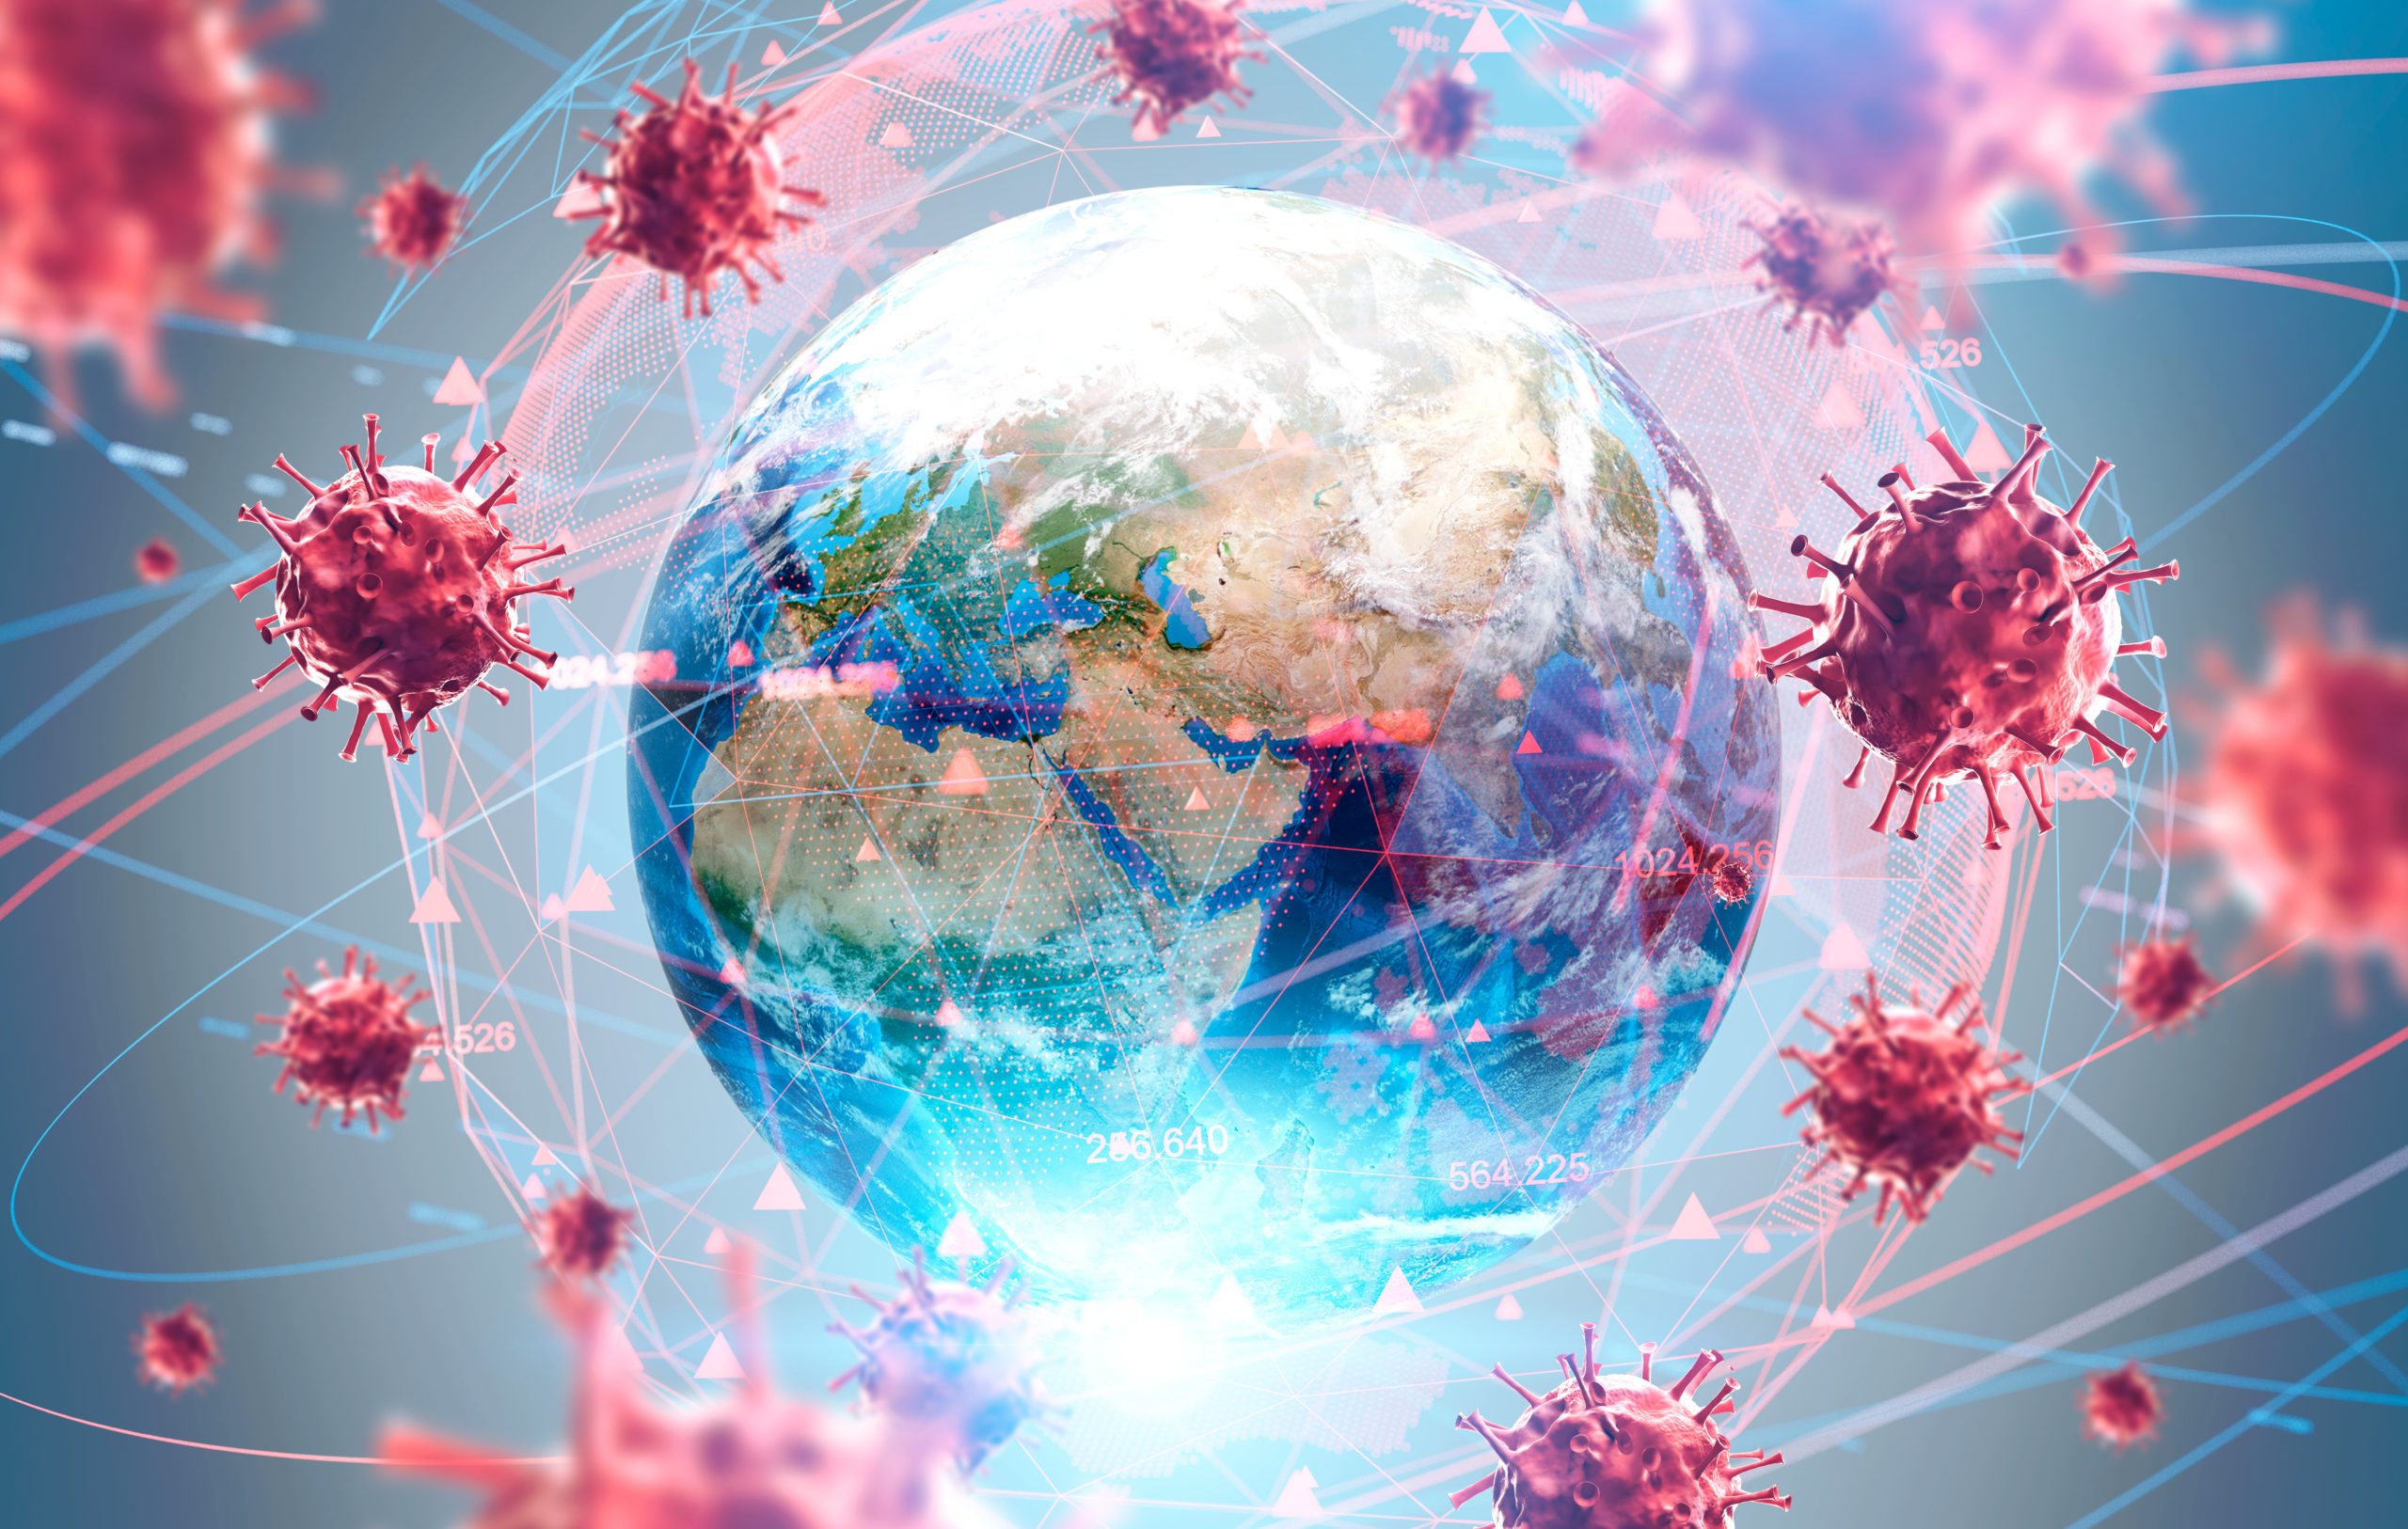 Rutgers Responds to the Coronavirus Outbreak